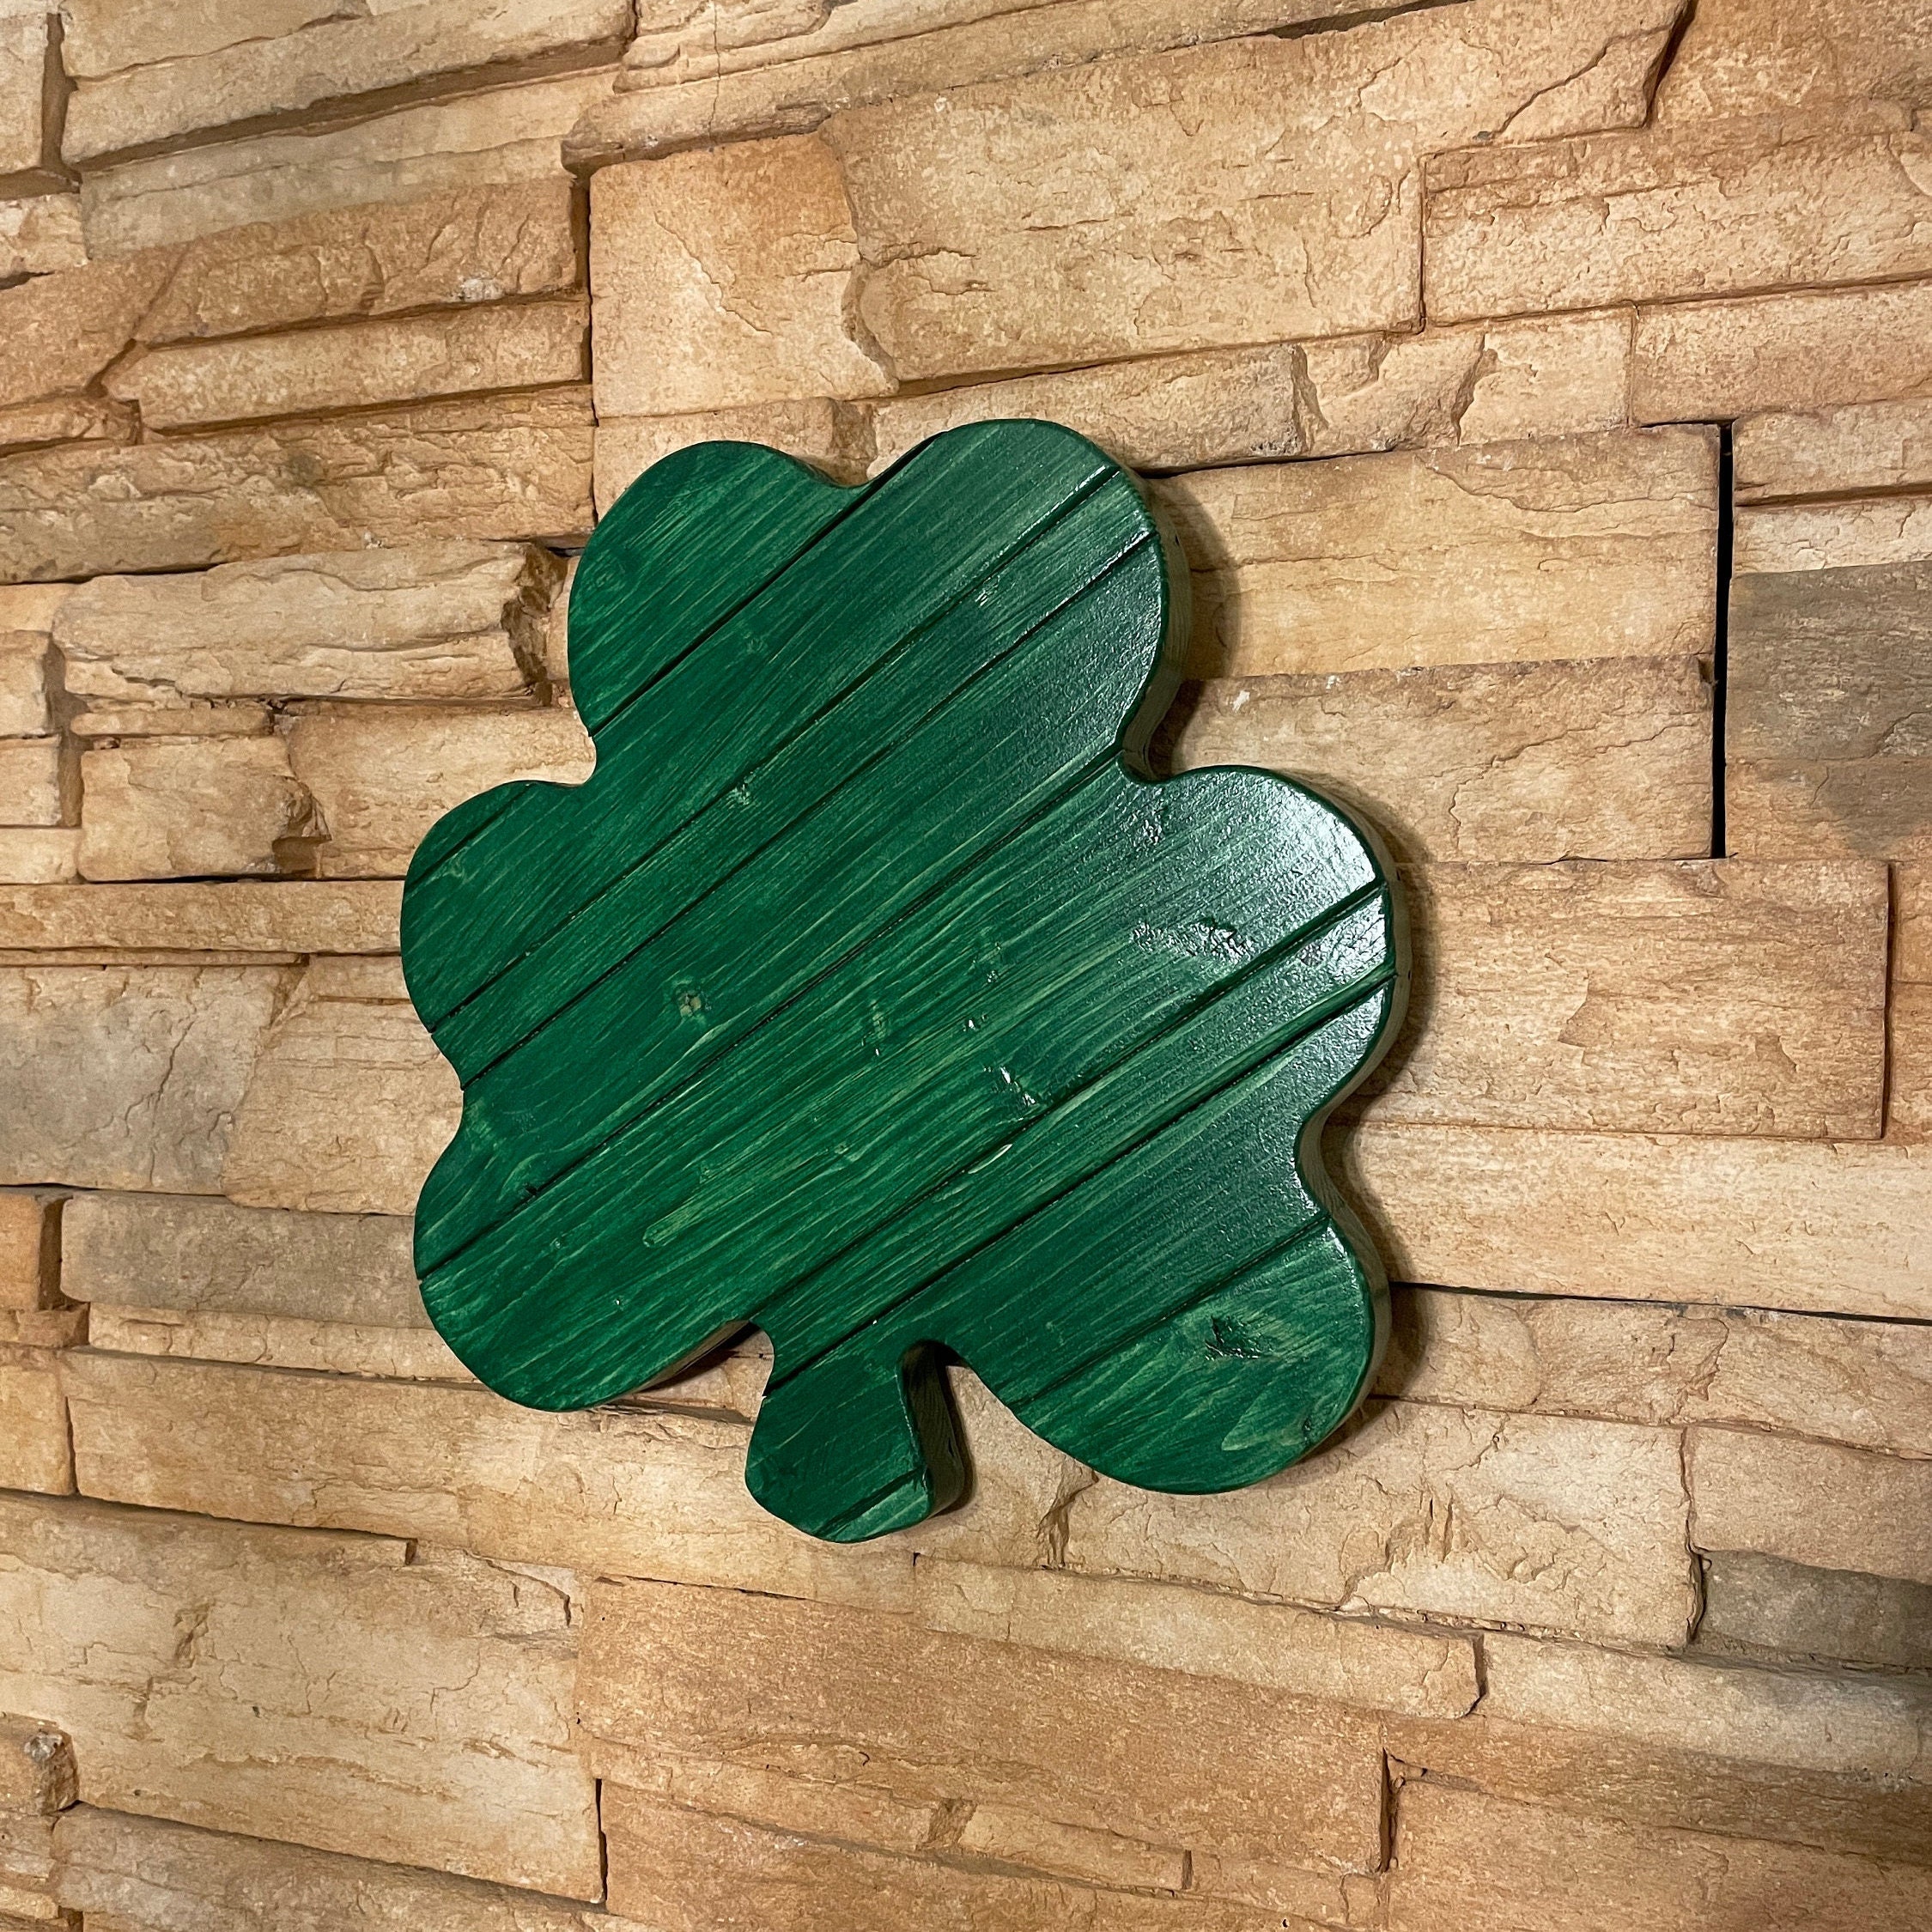 4 Leaf Clover Shape Wooden Shamrock Unfinished Wood Cutouts Variety of  Sizes (8 inch 1 Piece) nuKE143